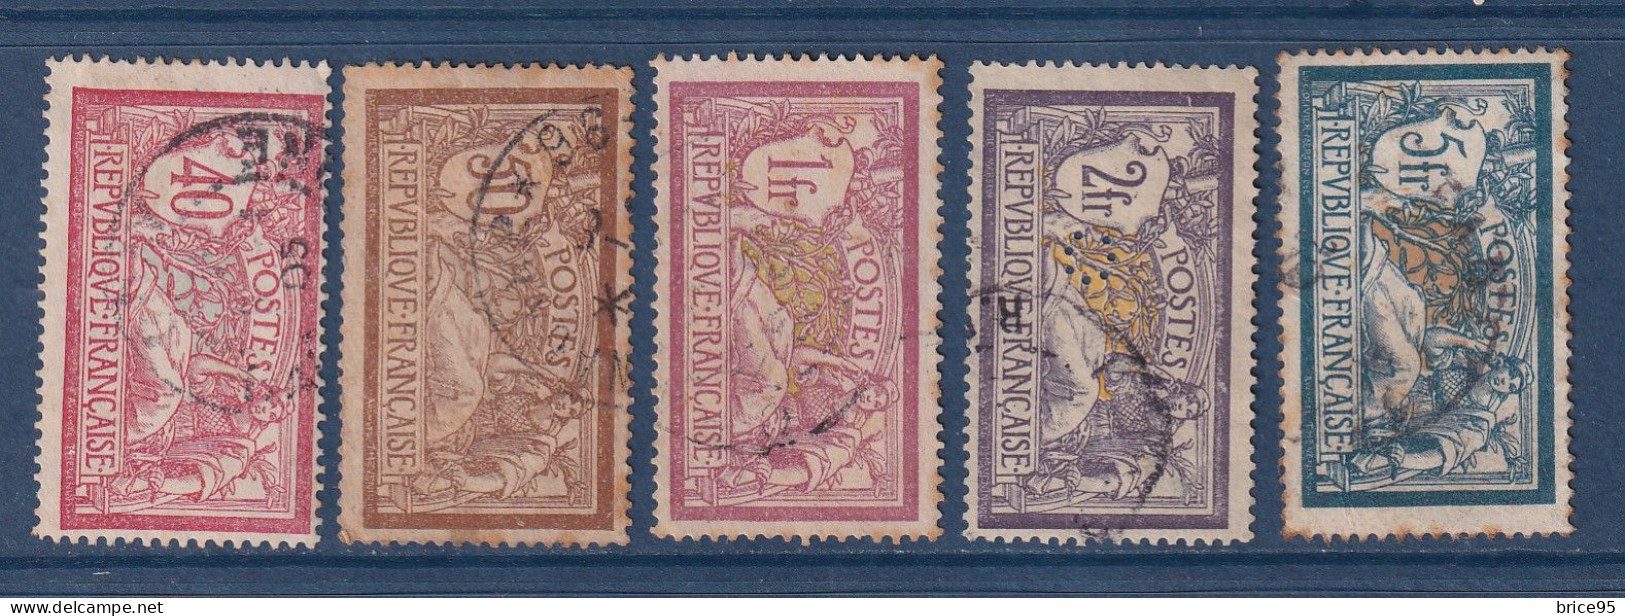 France - YT N° 119 à 123 - Oblitéré - 1900 - Usati